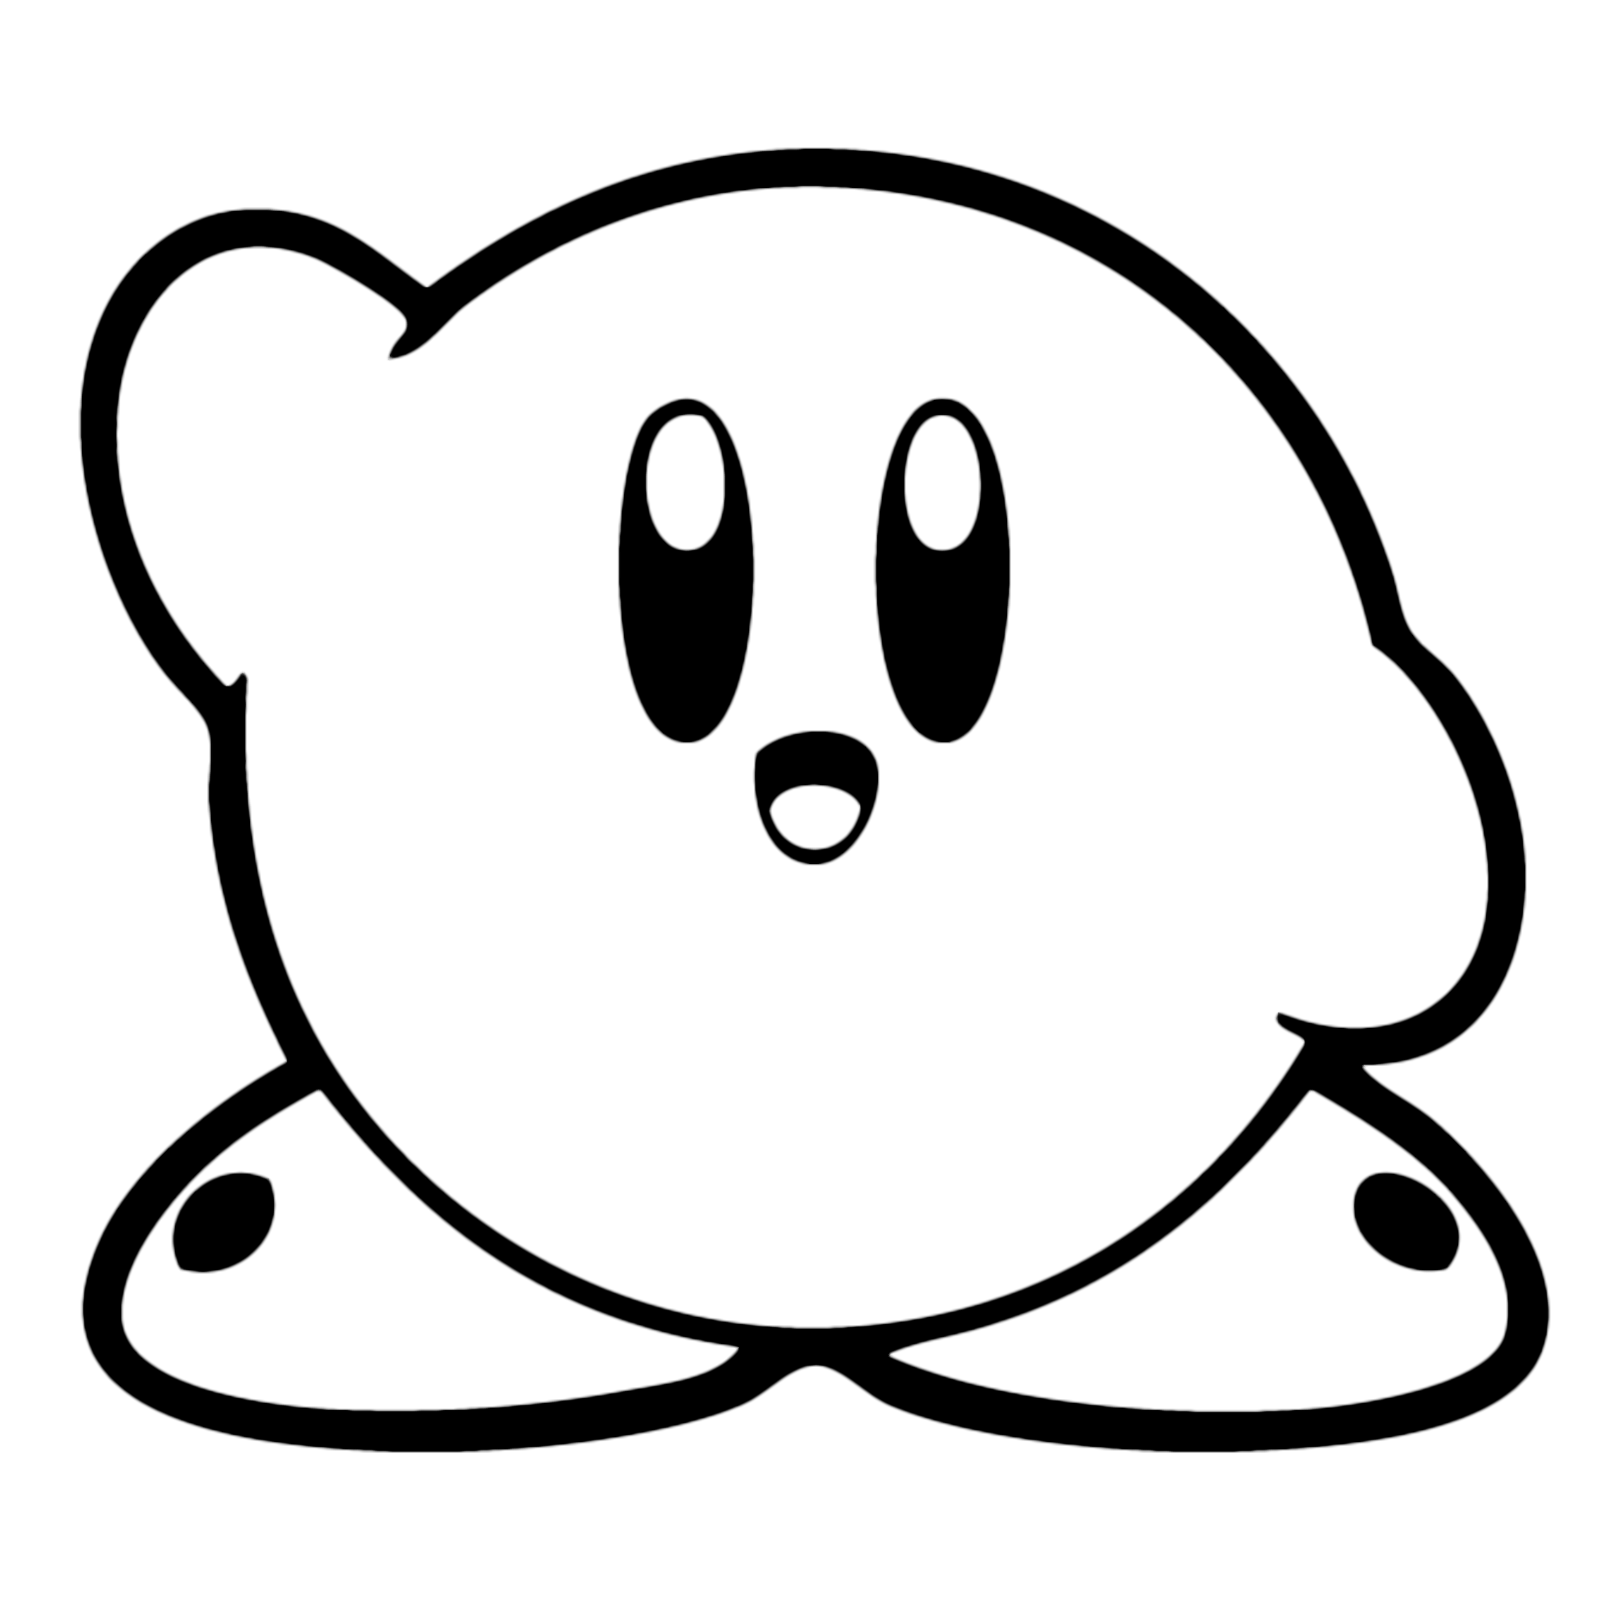 Kirby - Kirby saluta